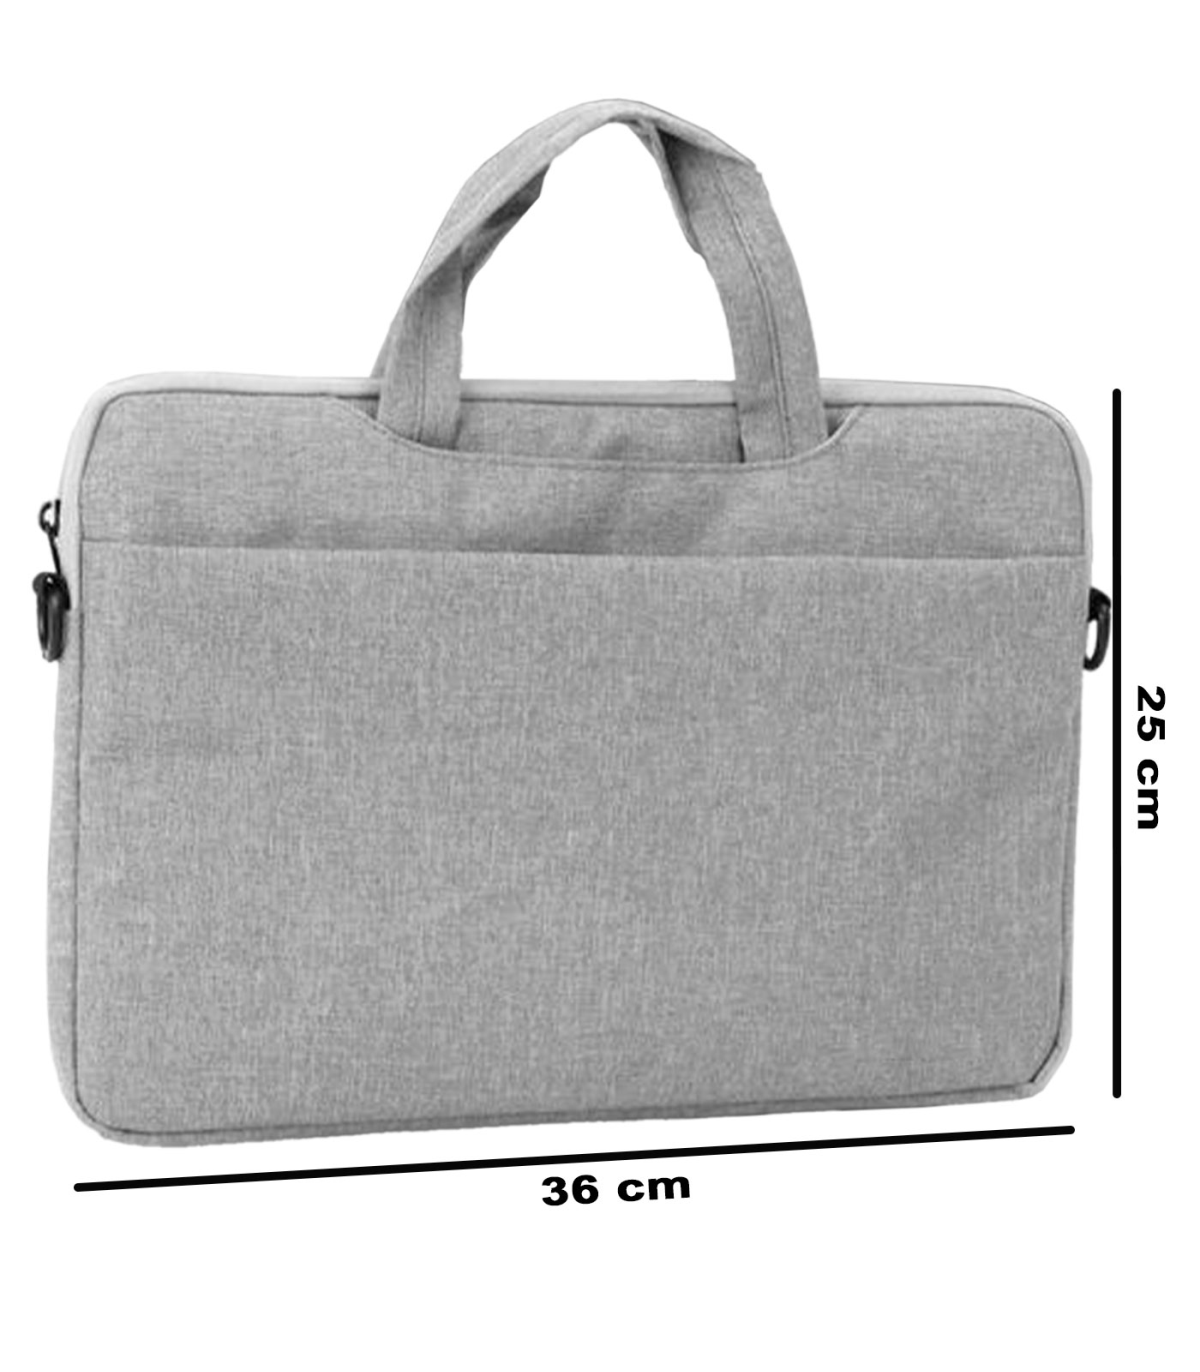 Tradineur - Bolsa para portátil de 11-12 pulgadas, bolso, maletín